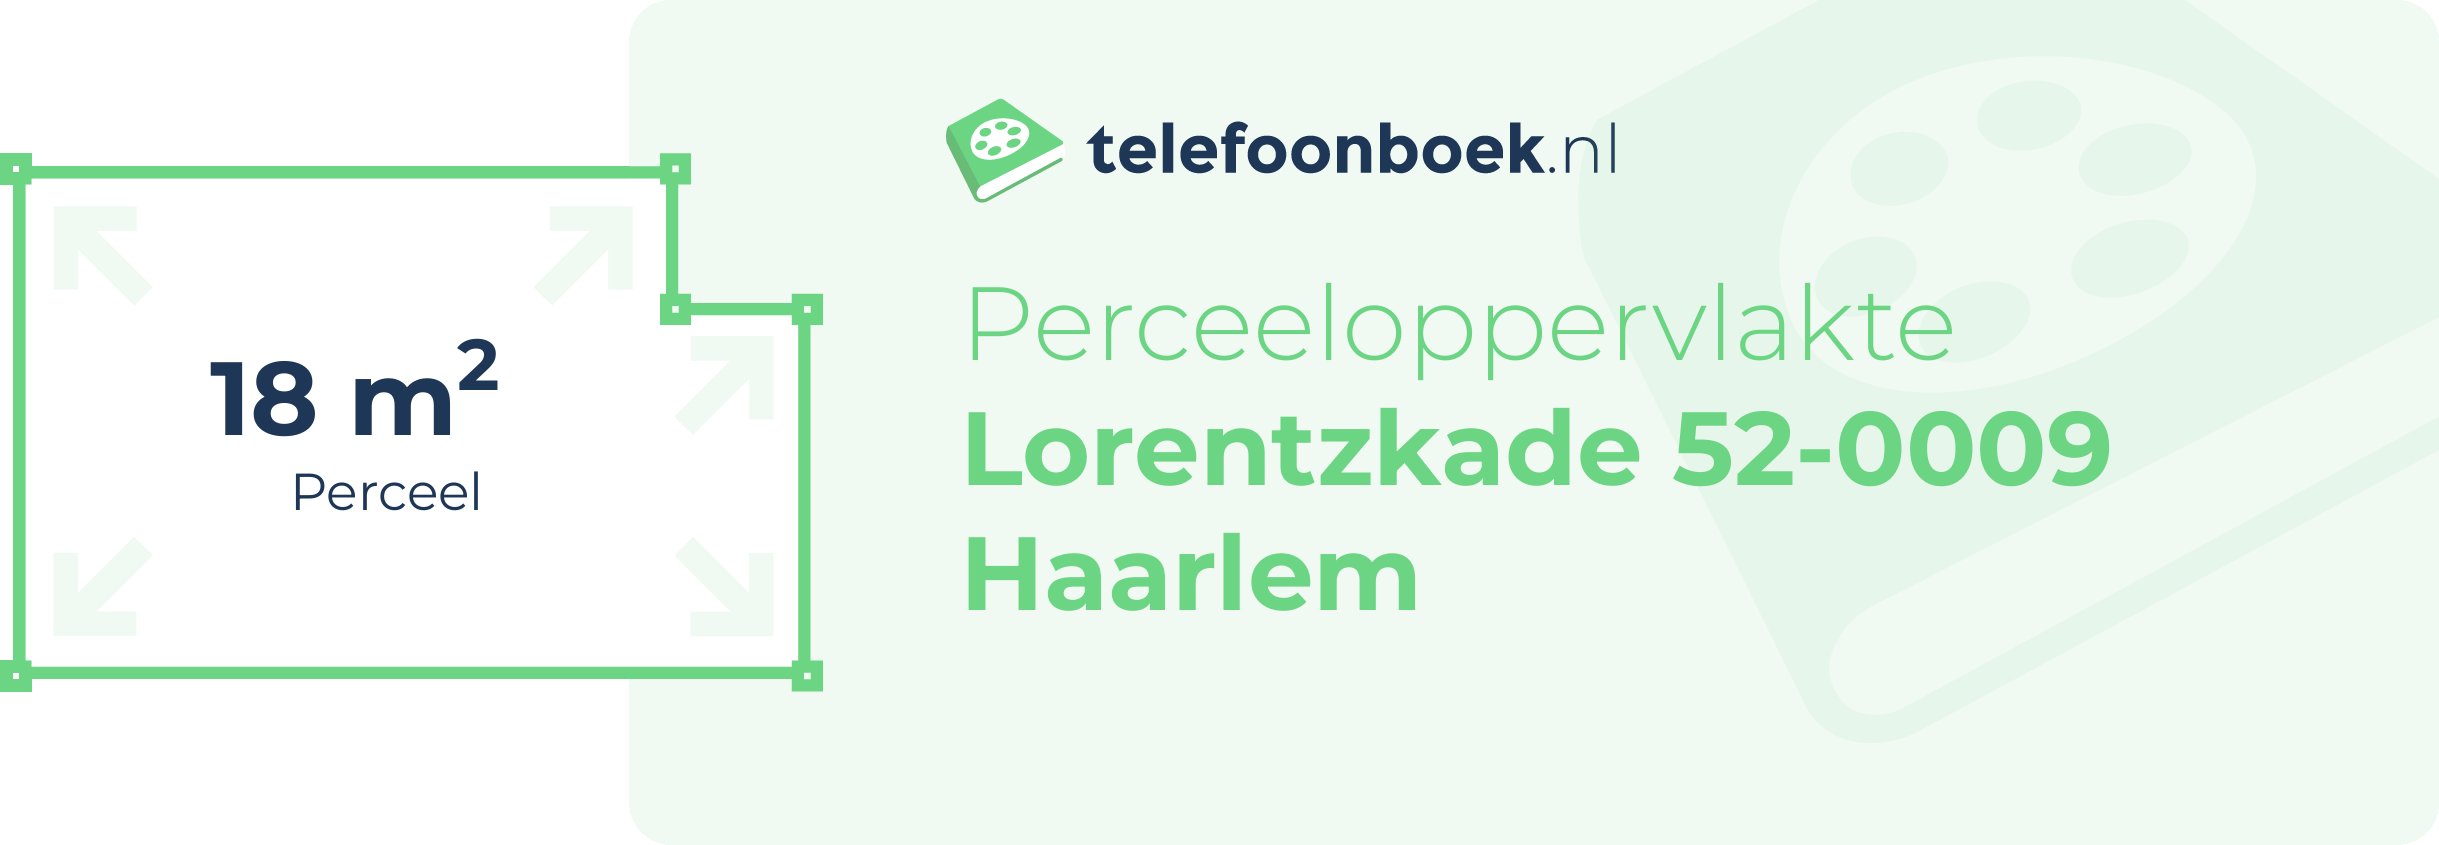 Perceeloppervlakte Lorentzkade 52-0009 Haarlem